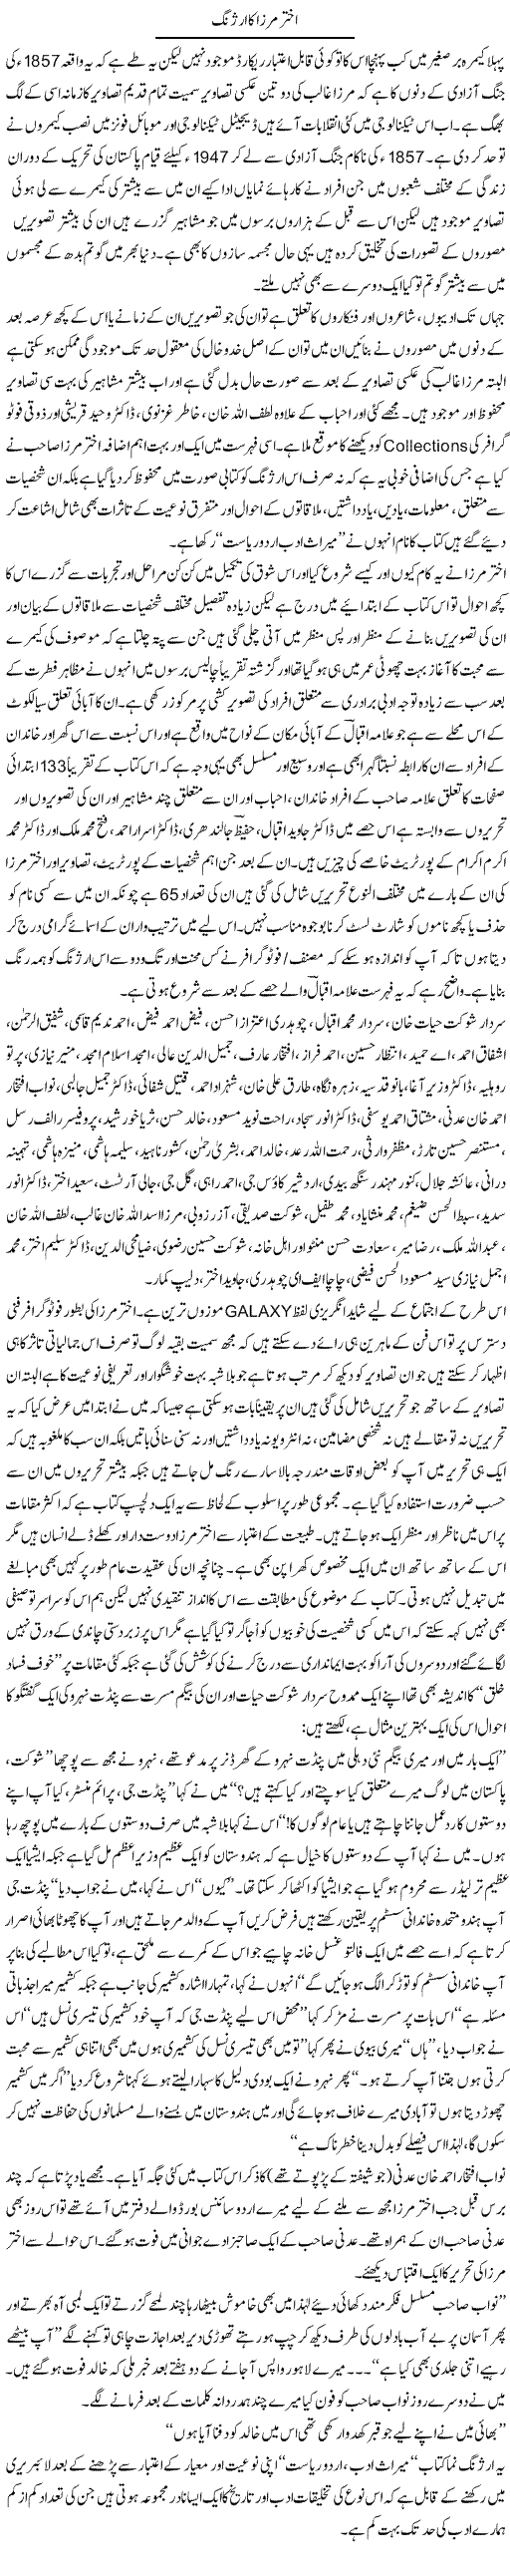 Akhtar Mirza Ka Arzang | Amjad Islam Amjad | Daily Urdu Columns